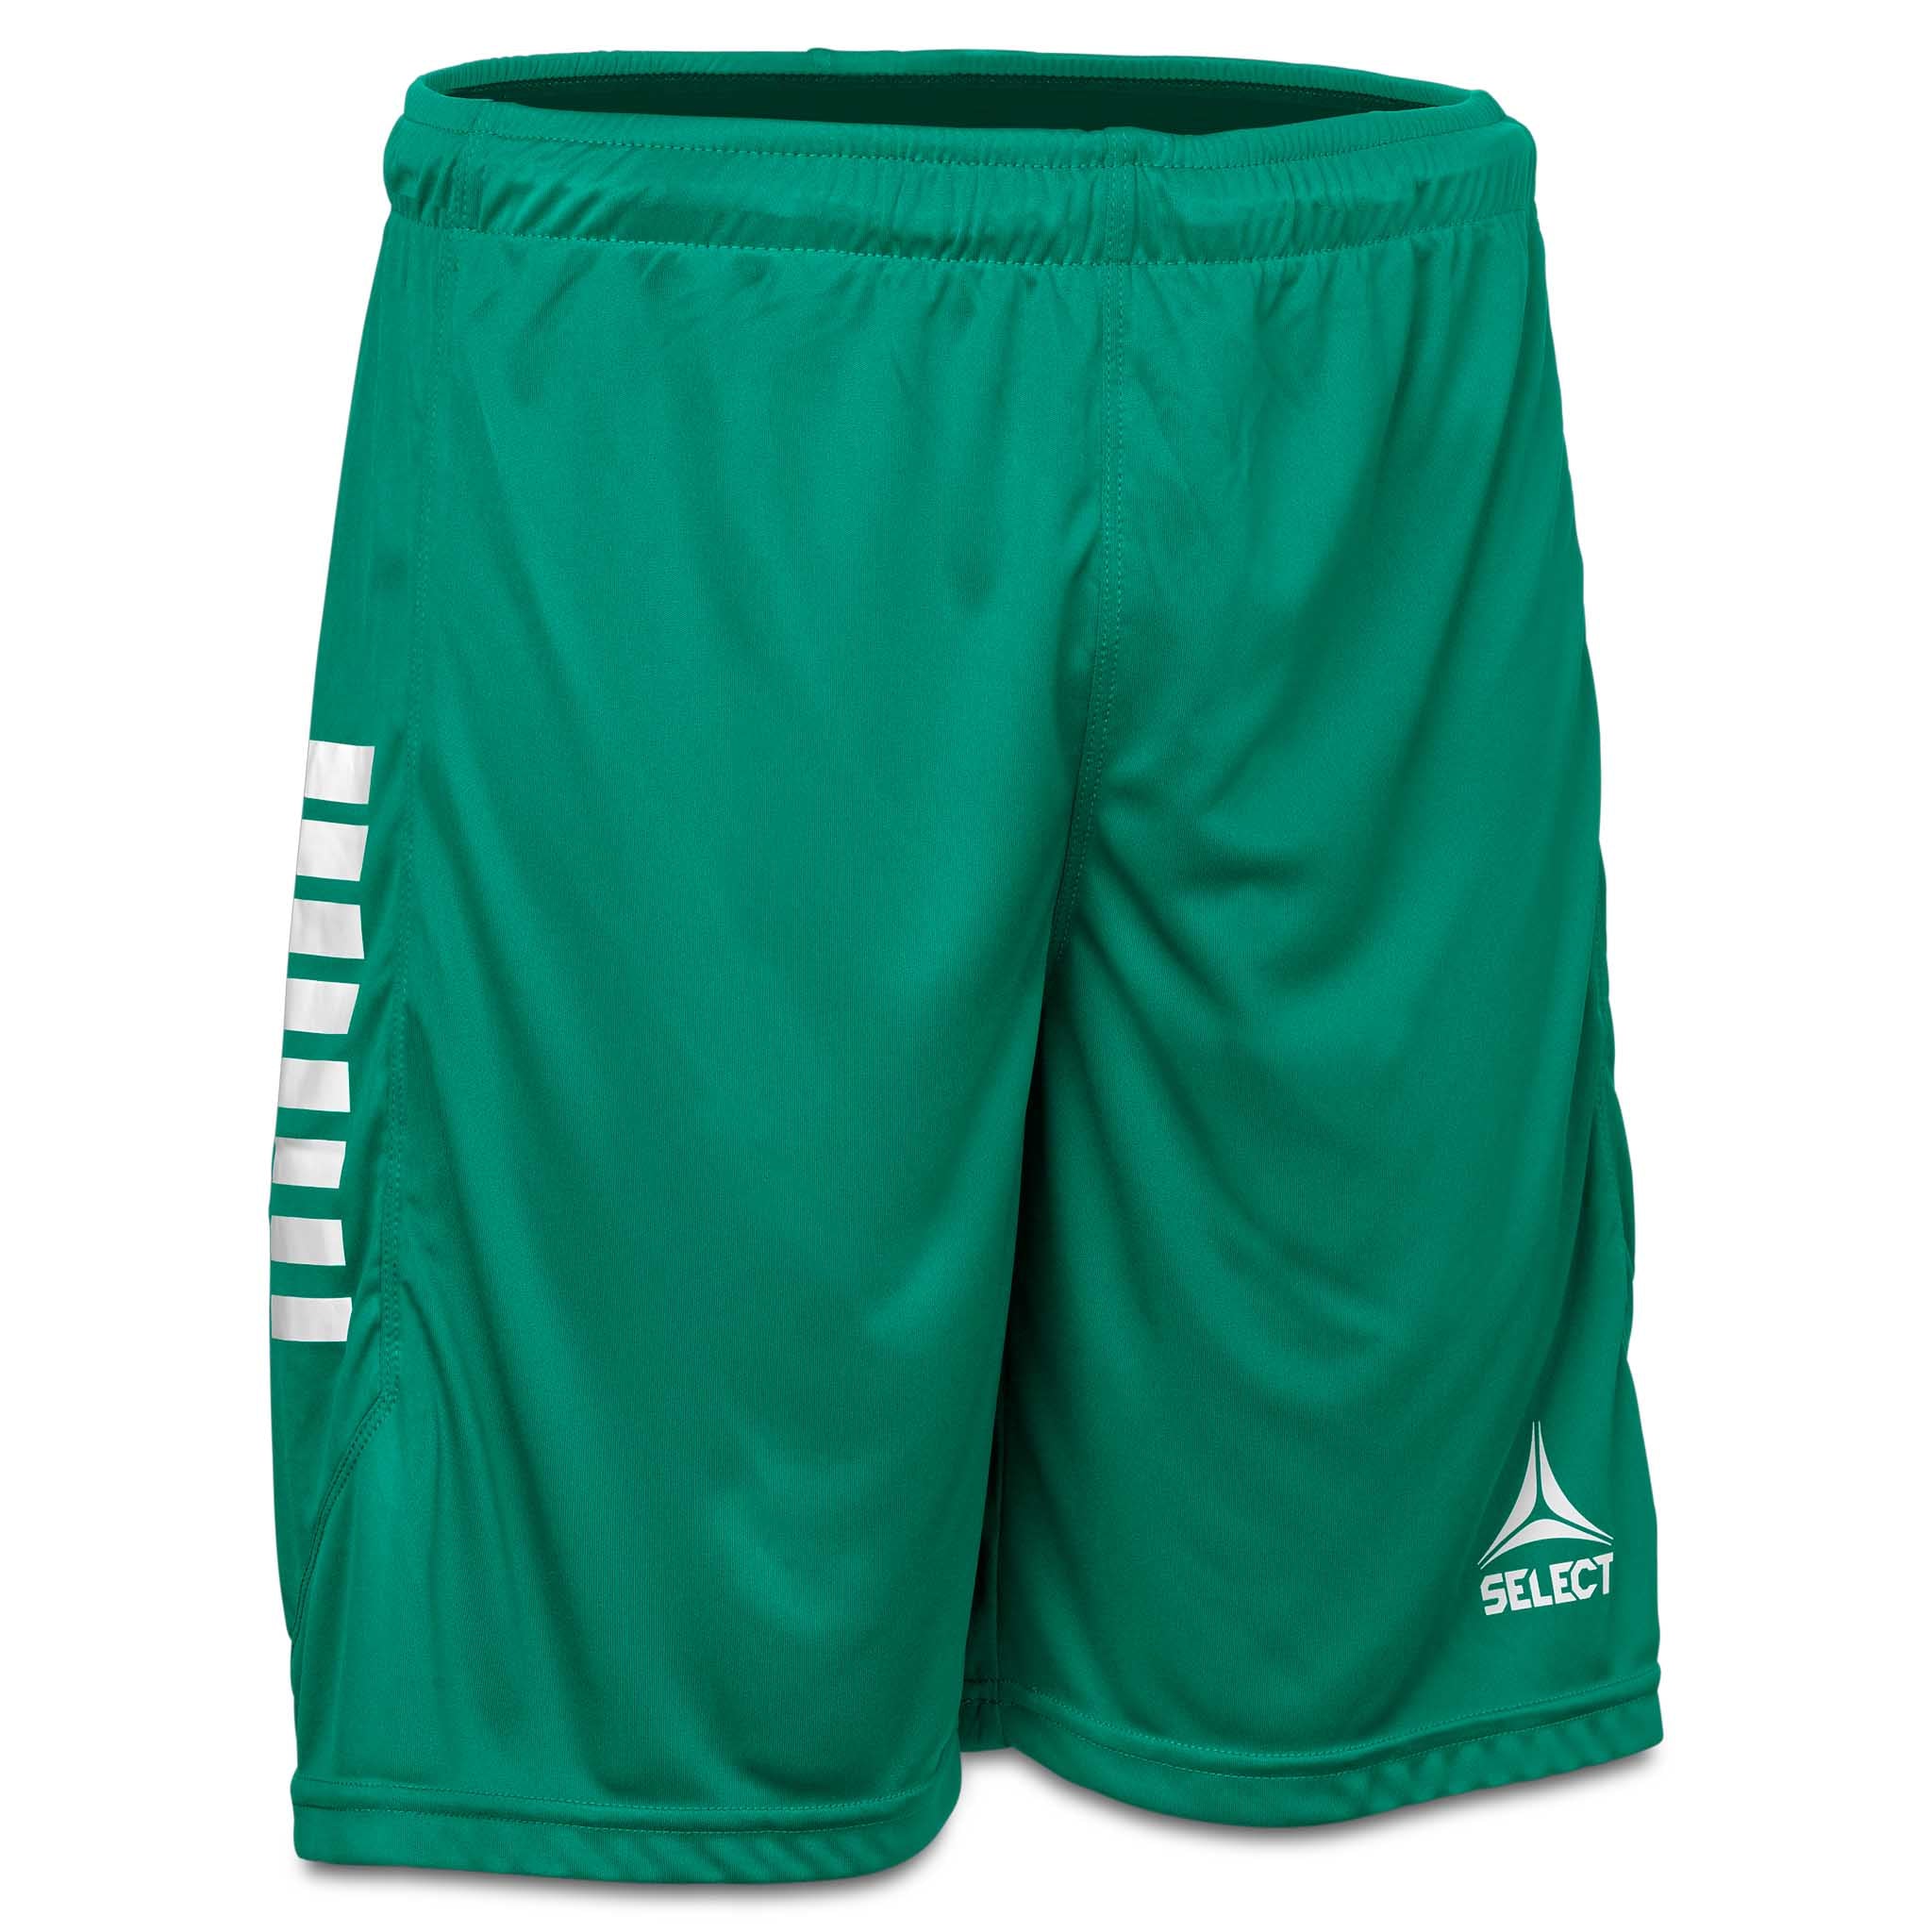 Monaco shorts #farve_grøn/hvid